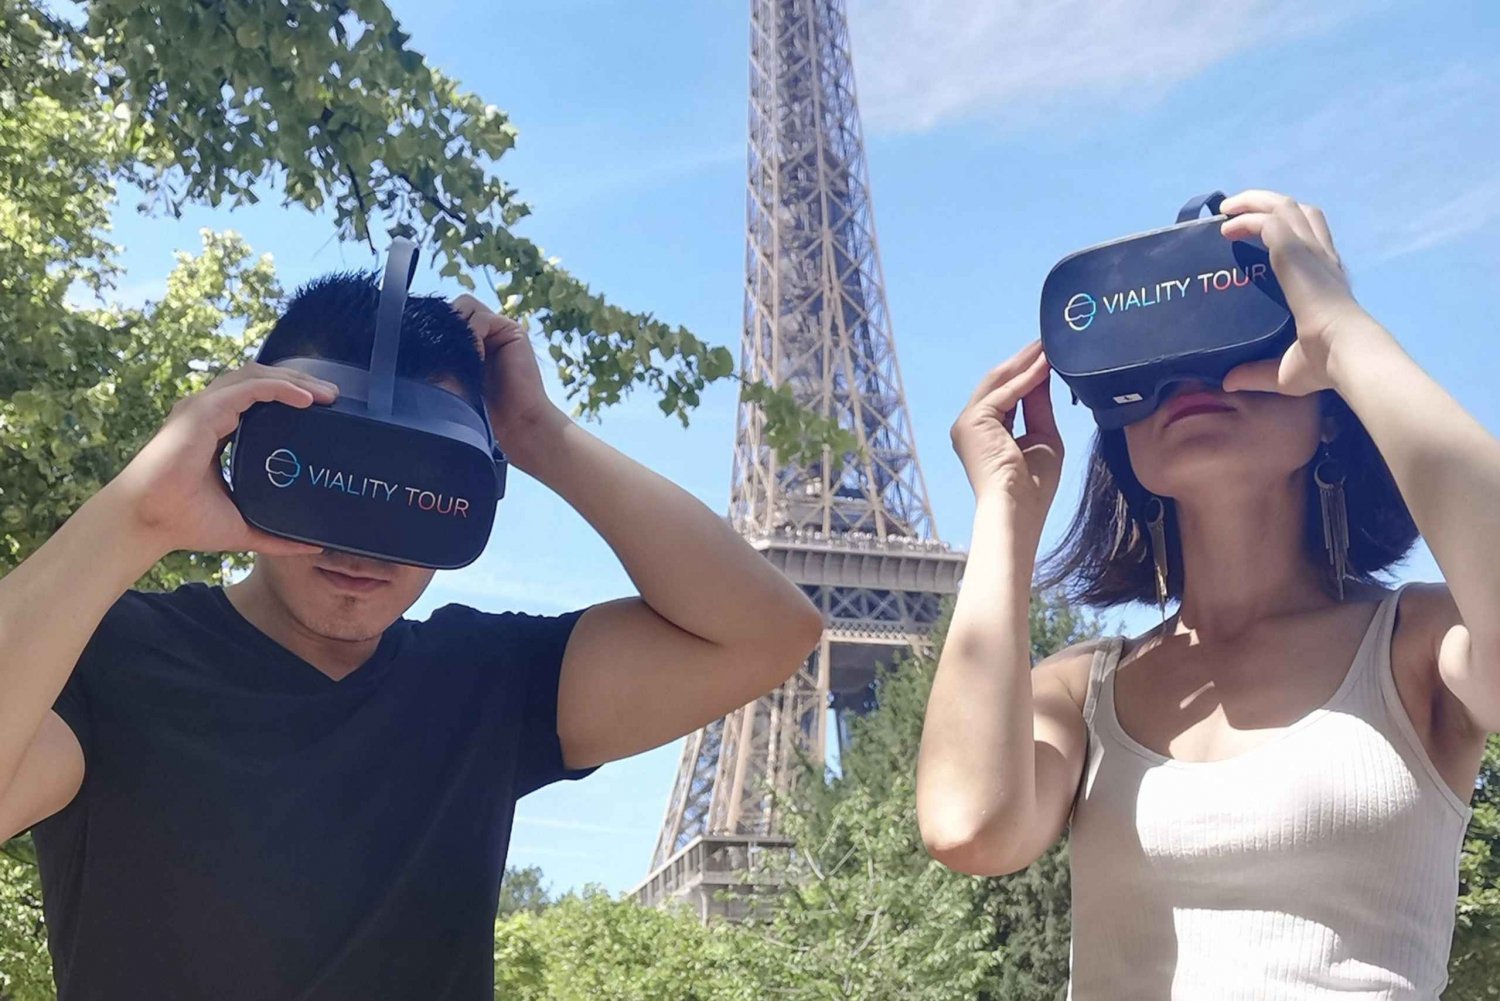 Paris : Immersive Eiffel Tower tour with virtual reality